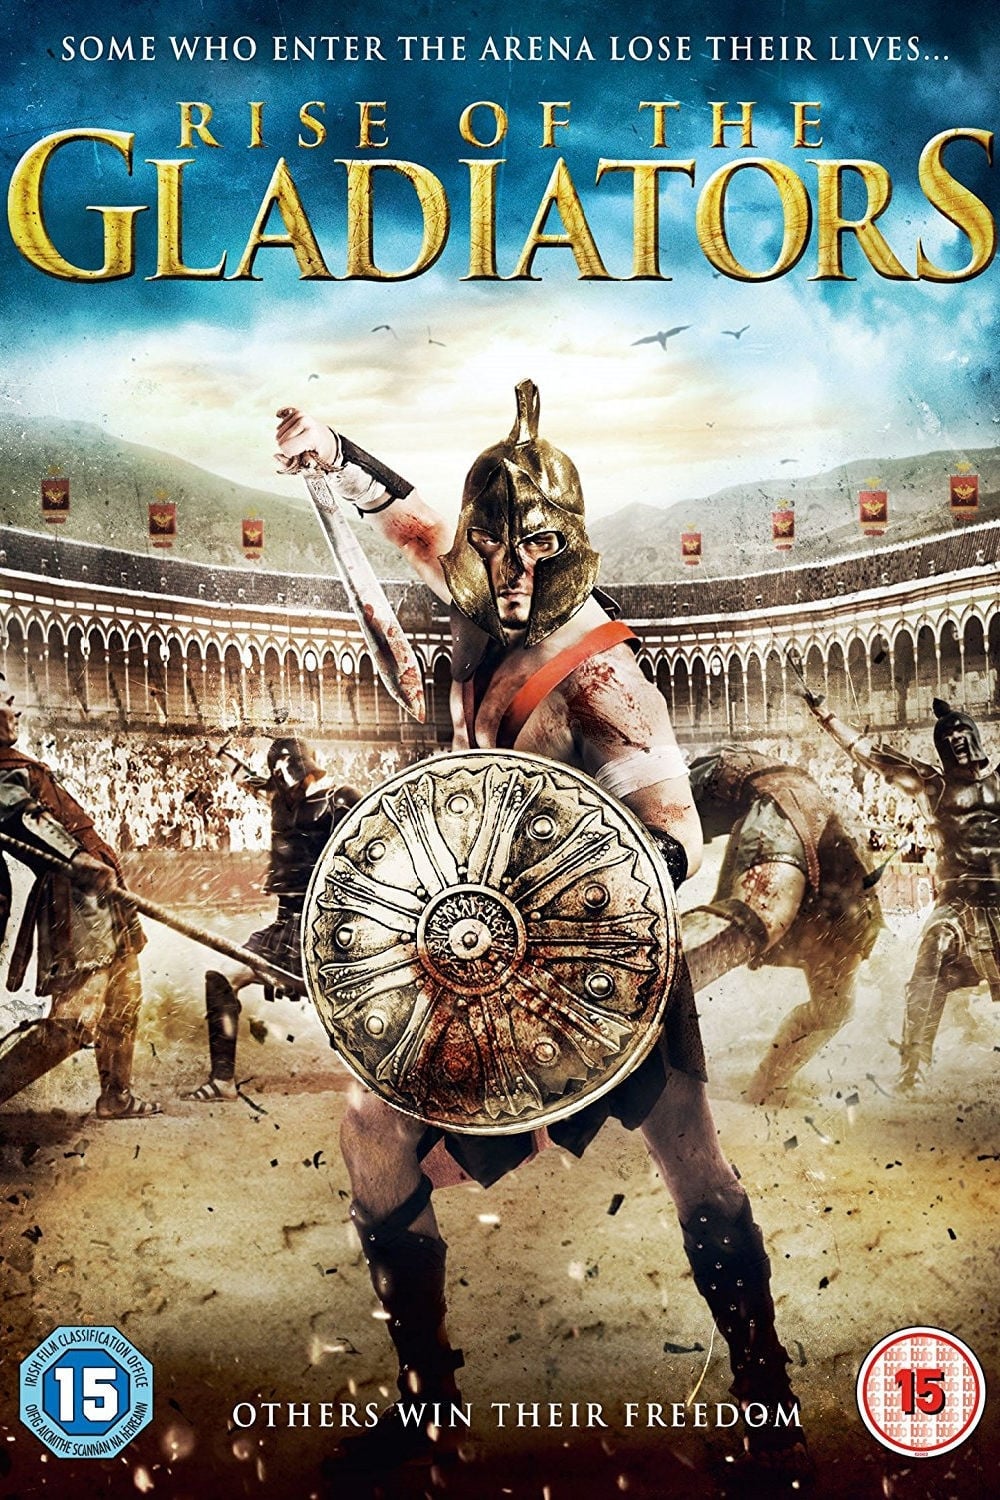 Chiến Binh Vĩ Đại - Kingdom Of Gladiators II (2017)